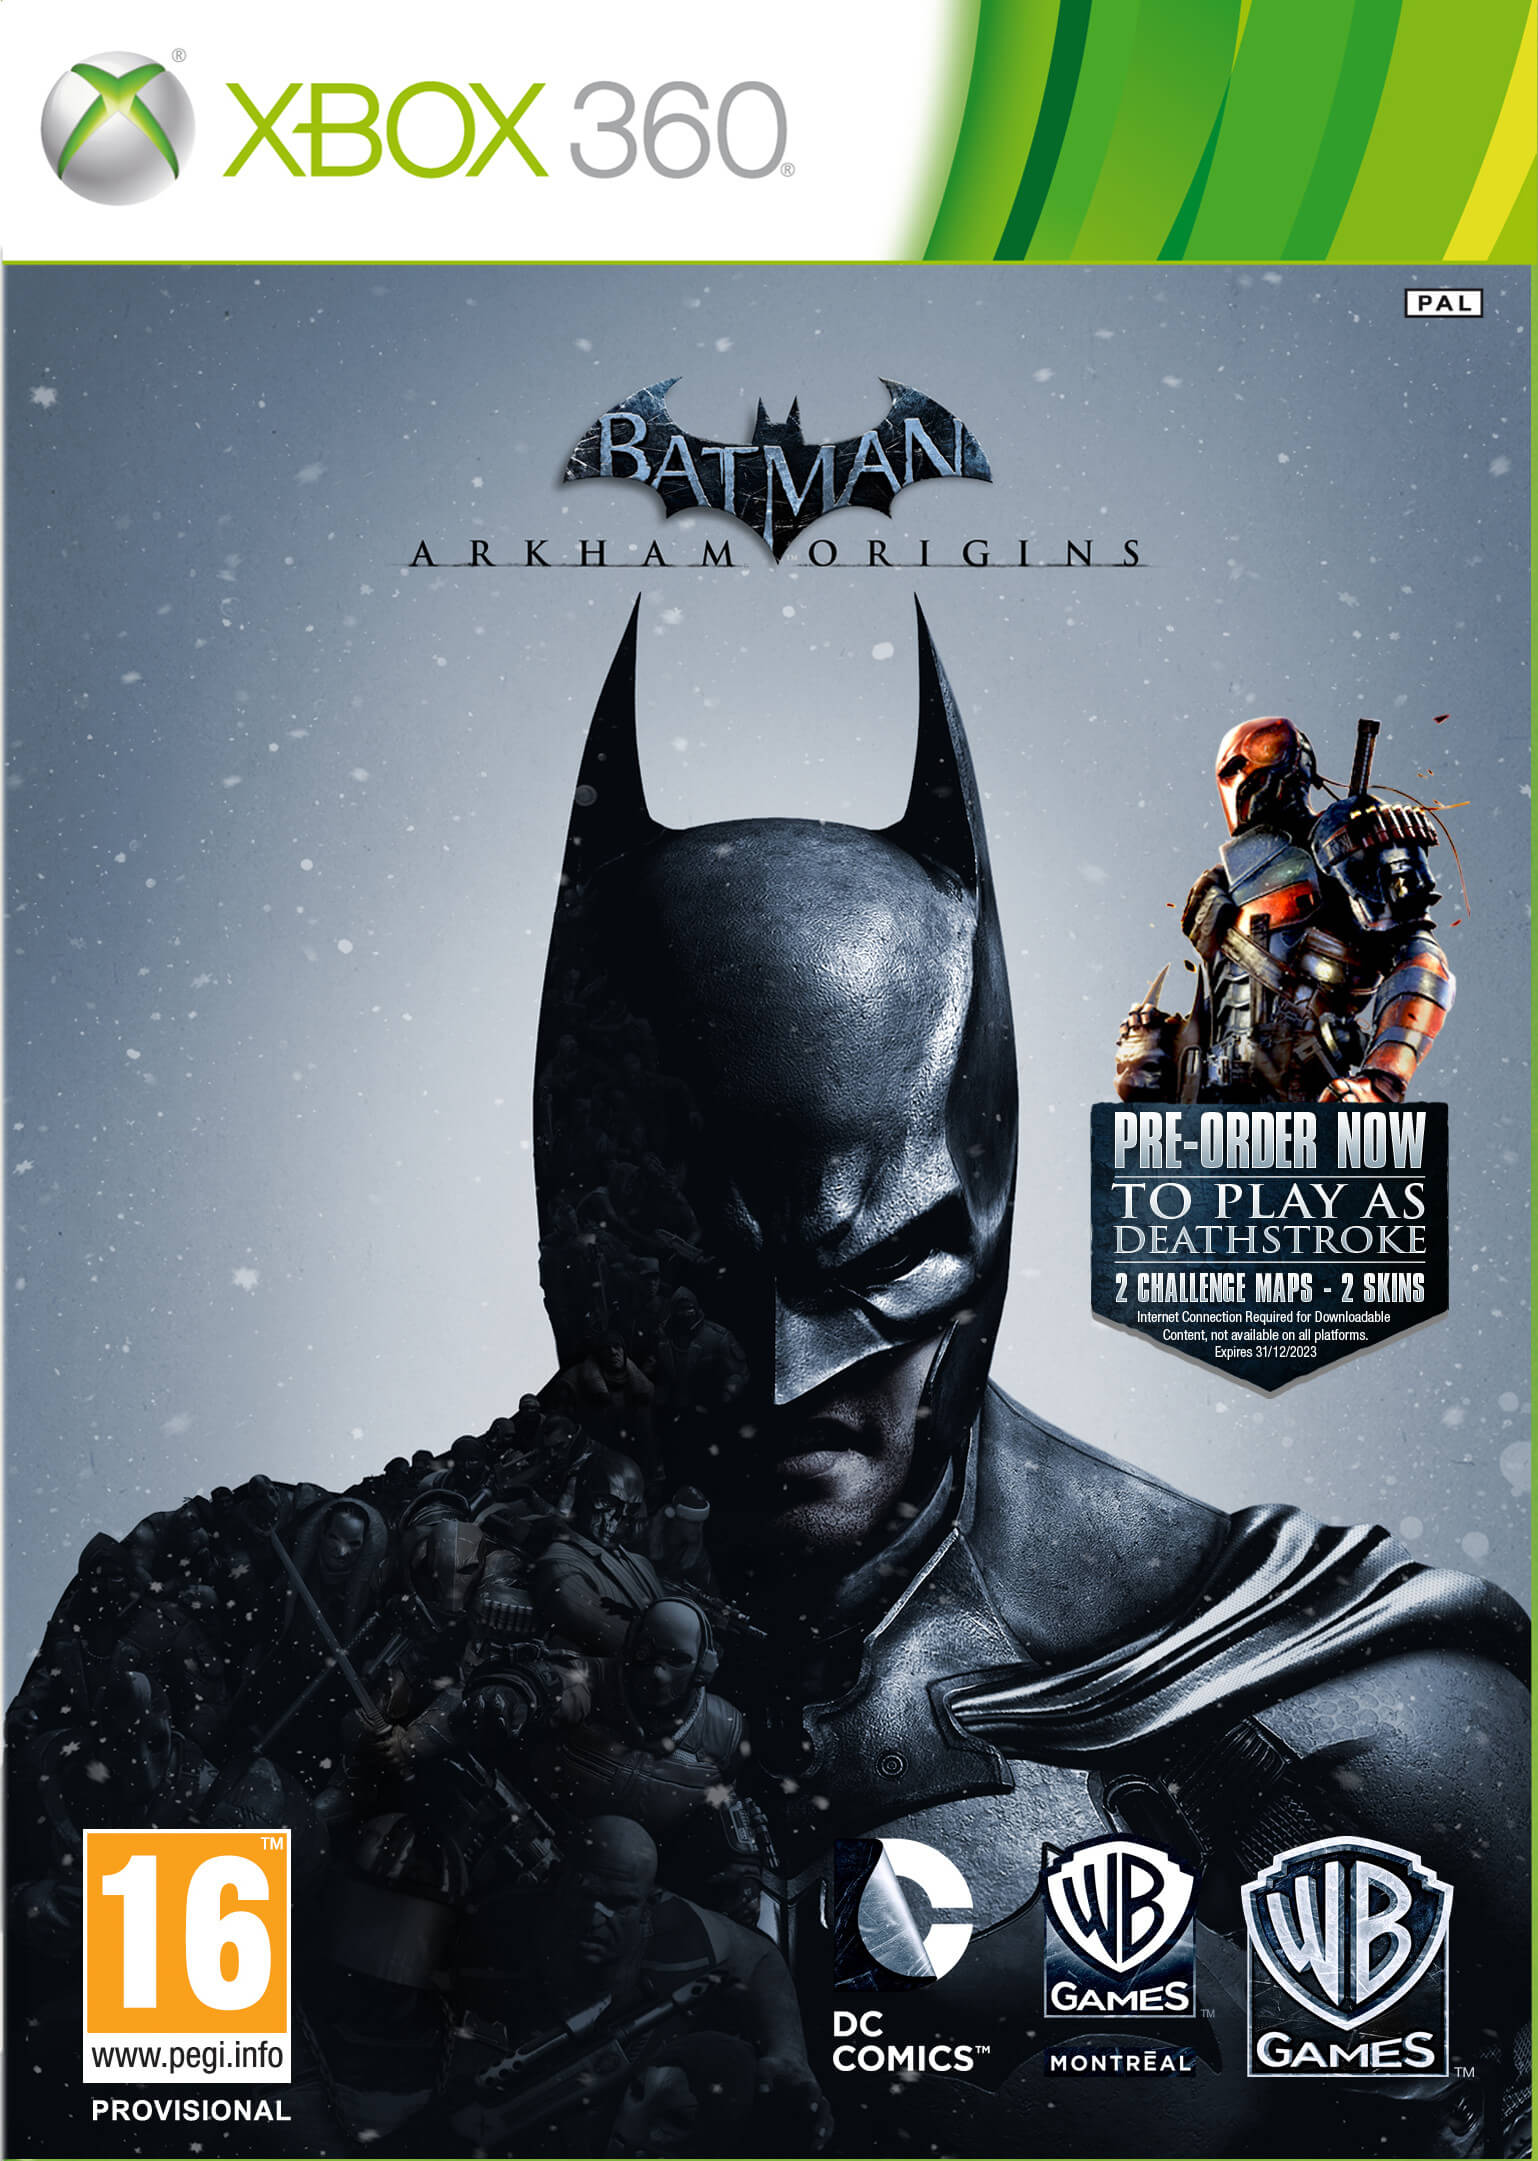 Batman цена. Batman летопись Аркхема ps3. Batman Arkham Origins Xbox 360. Batman Arkham Xbox 360. Batman хбокс 360 летопись.